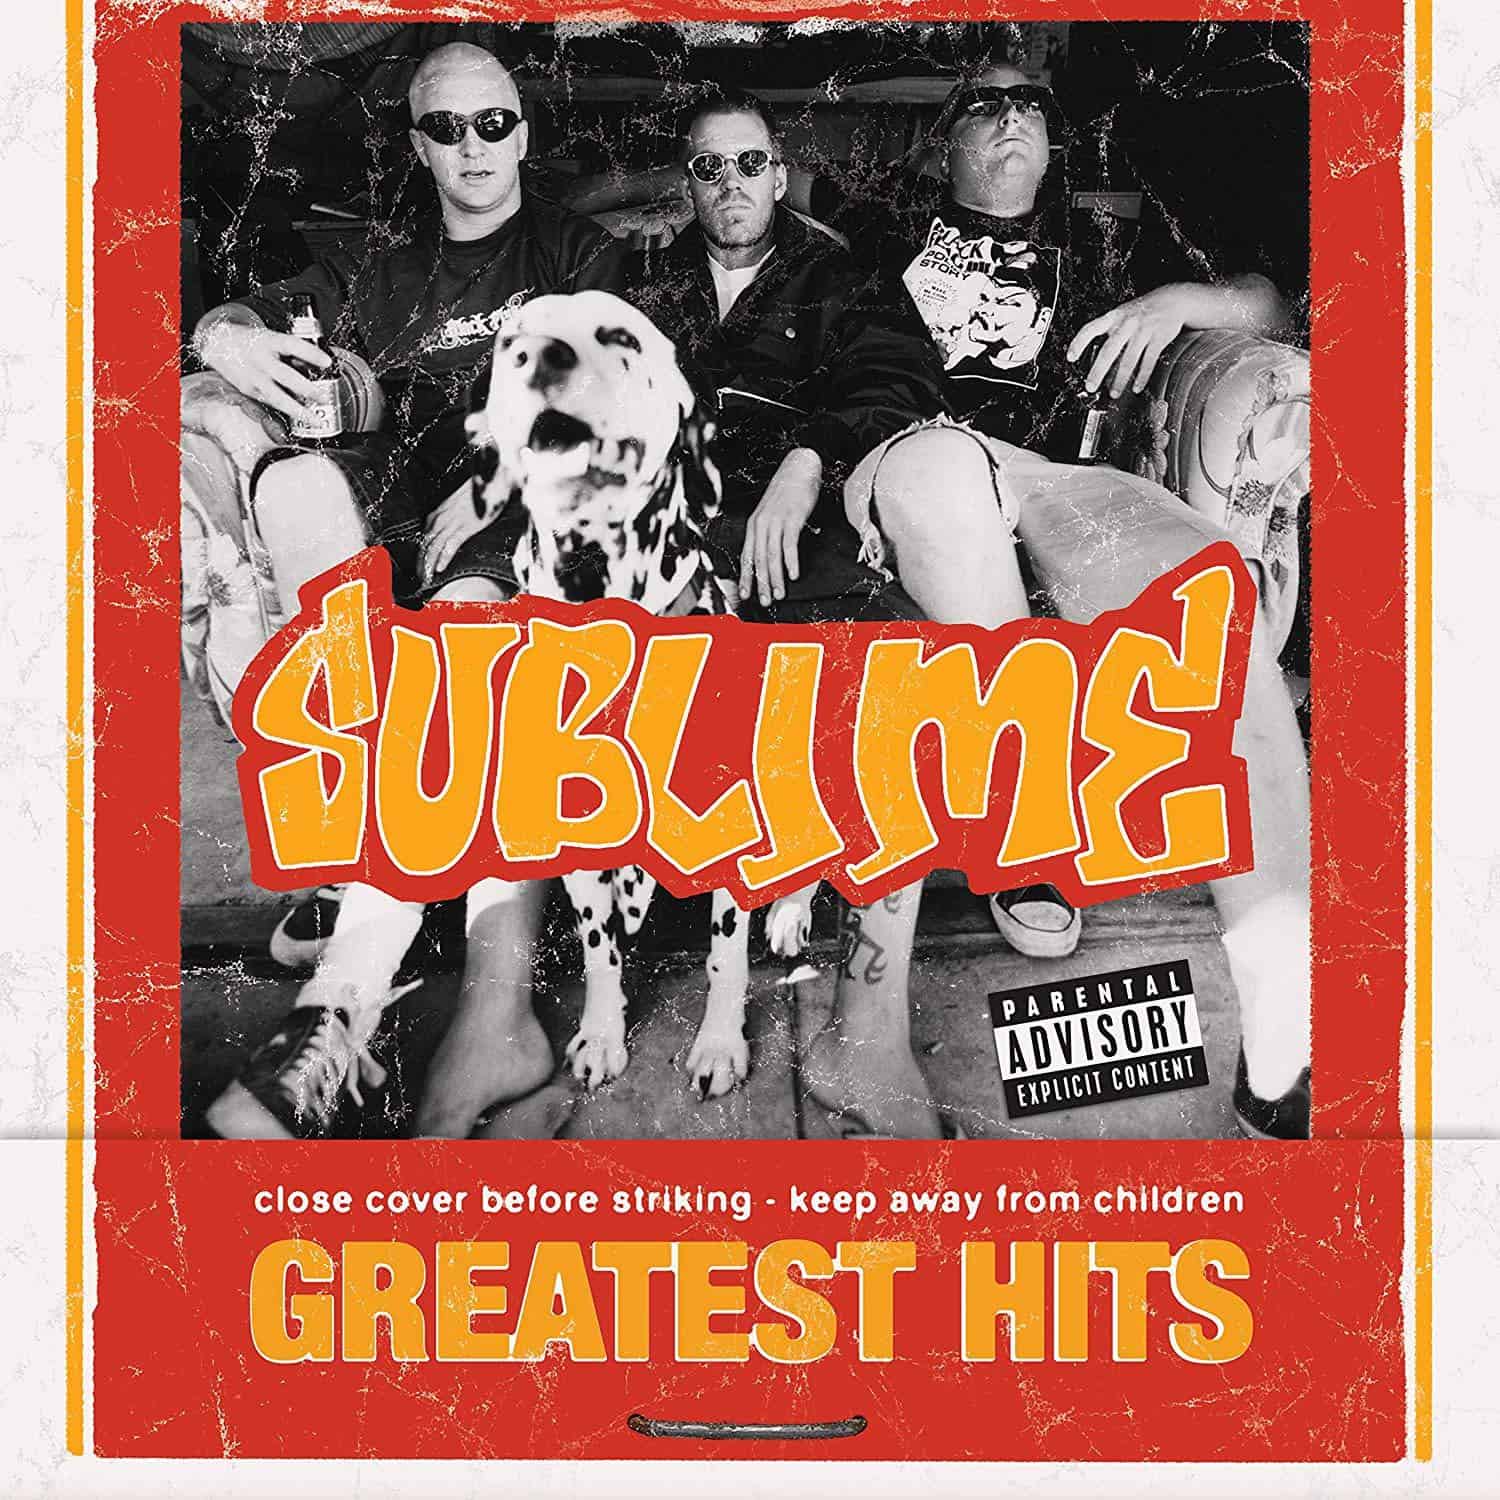 Sublime-Greatest-Hits-vinyl-record-album1